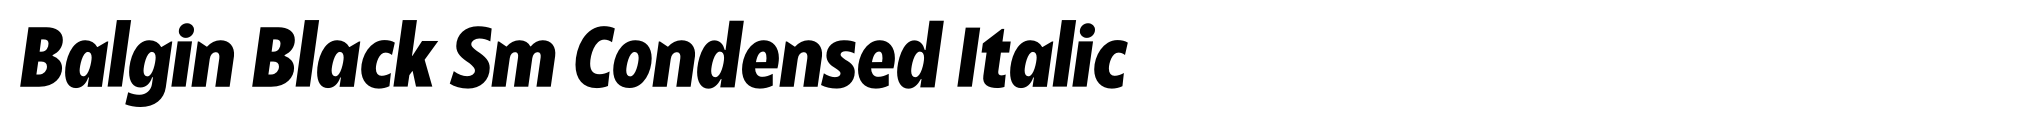 Balgin Black Sm Condensed Italic image